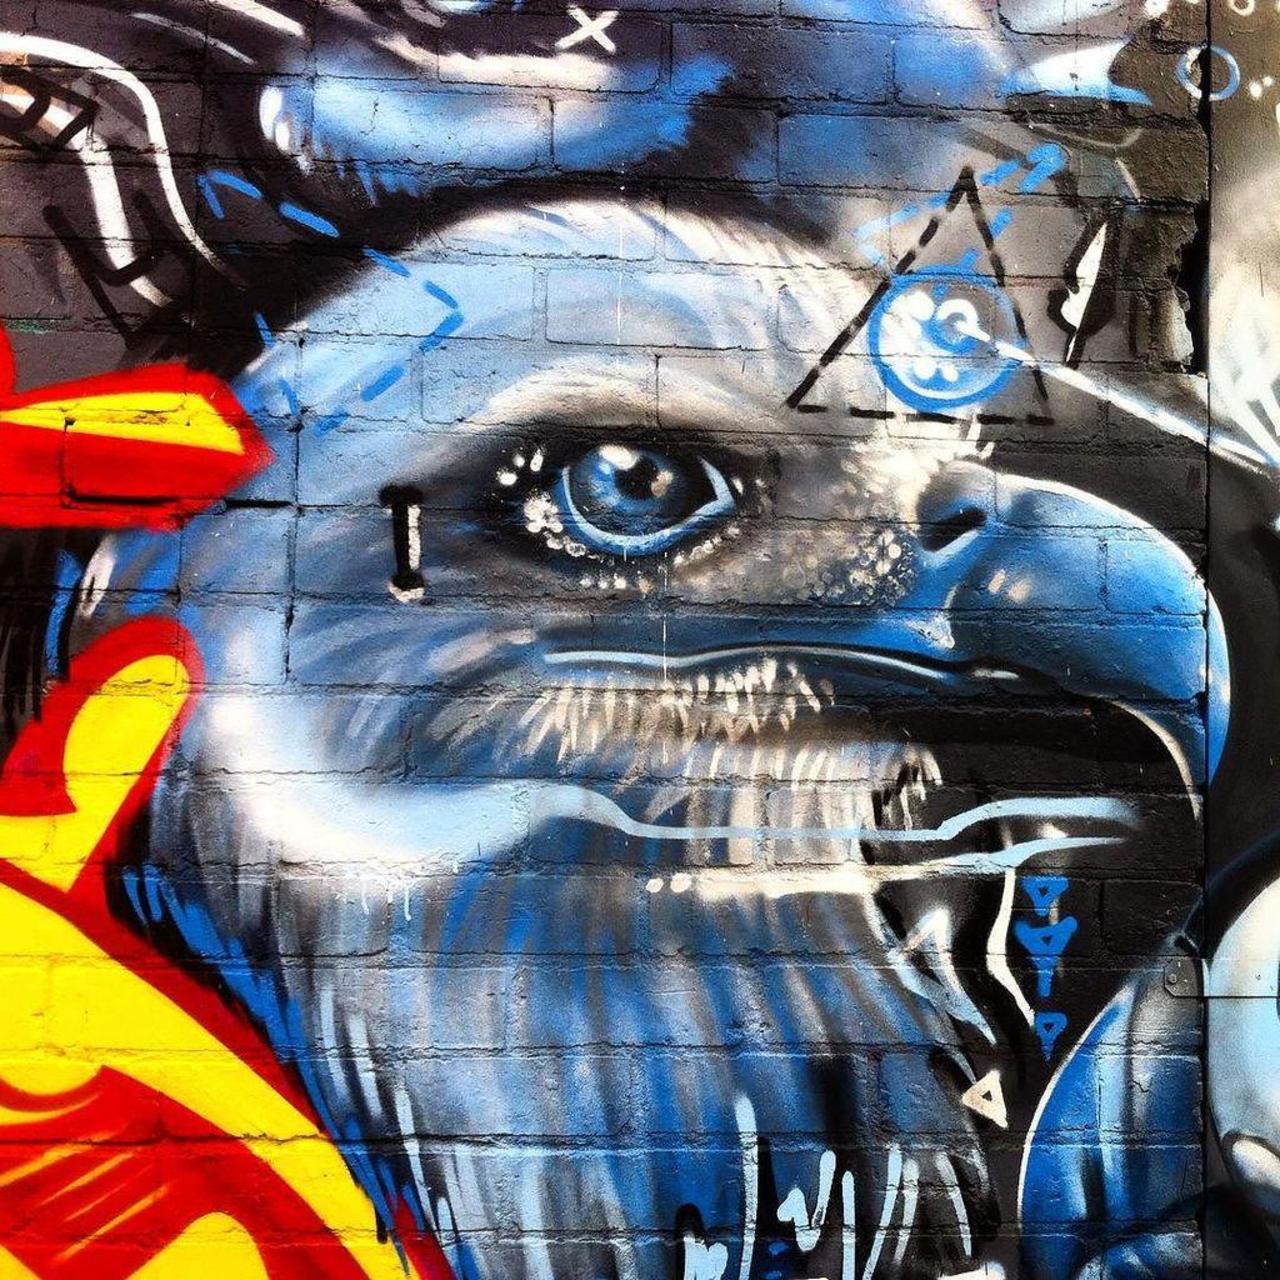 #streetart #streetartist #arte #artist #art #artistic #arteurbano #urban #urbanart #wallart #graffiti #graffitiart … http://t.co/2xtrajpgyc